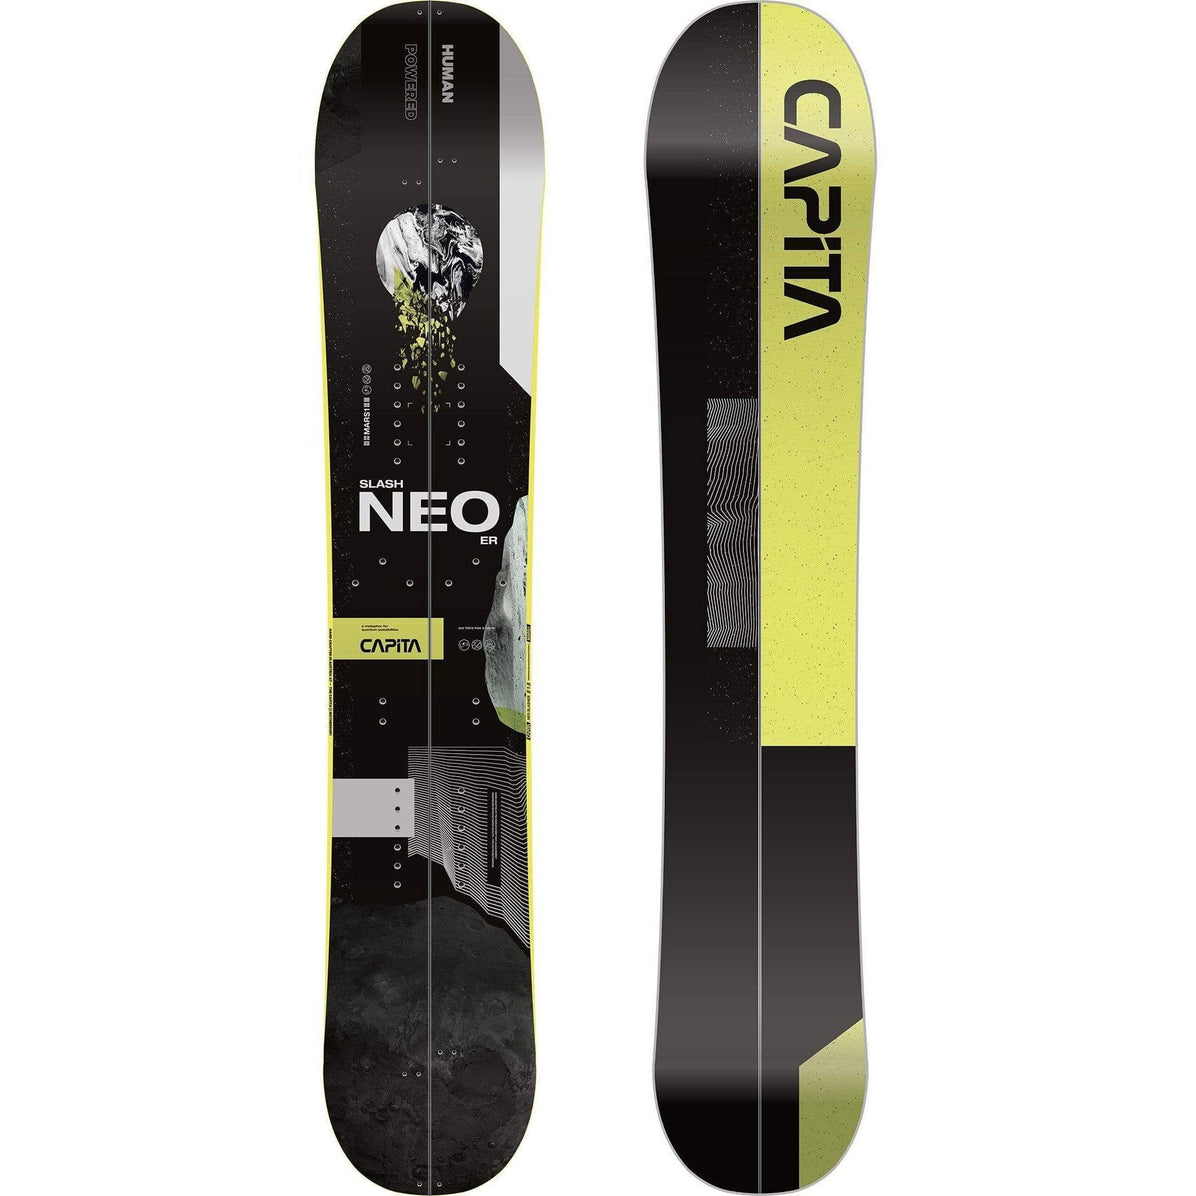 Capita Neo Slasher Snowboard 2022